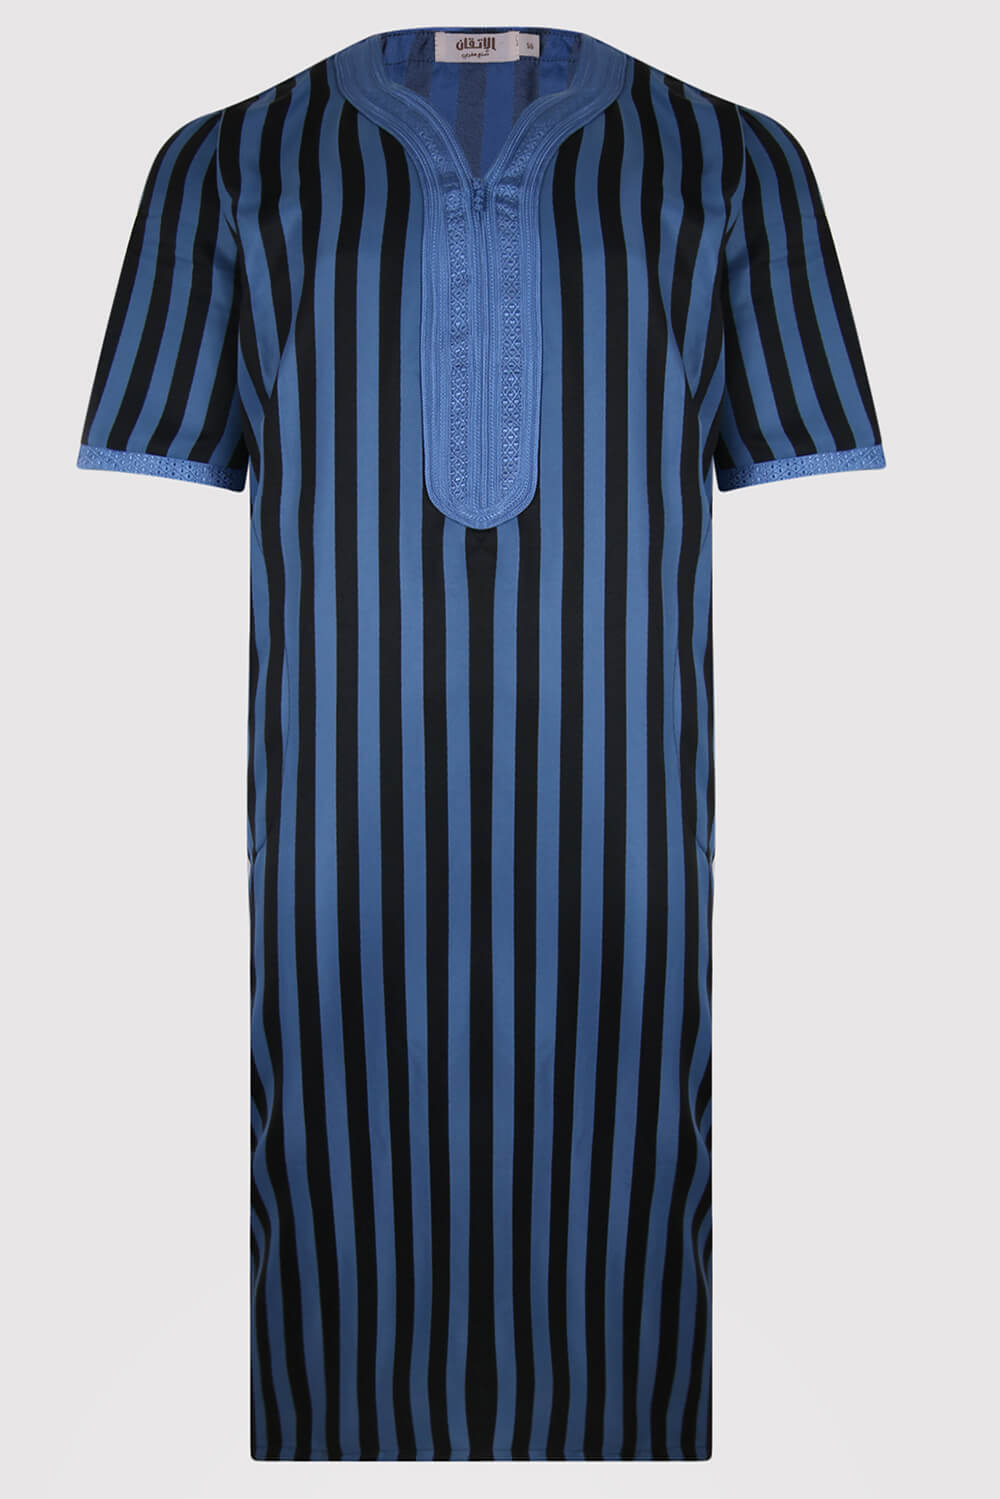 Gandoura Napoli No2 Men's Short Sleeve Long Striped Thobe in Black & Blue